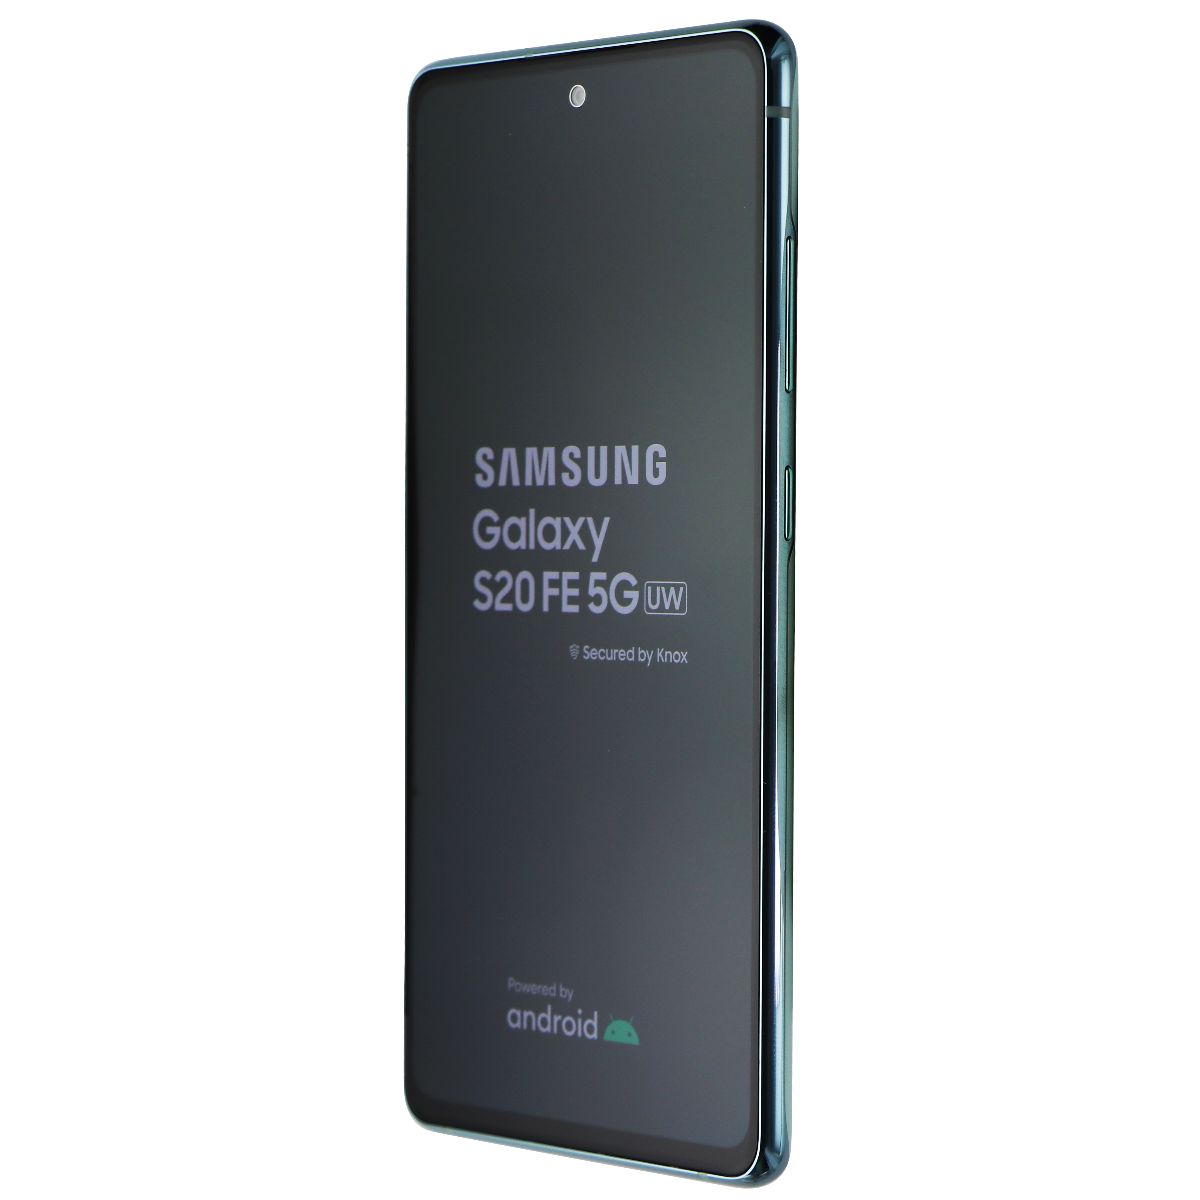 Samsung Galaxy S20 FE 5G UW (6.5-in) (SM-G781V) Verizon Only - 128GB/Cloud  Mint